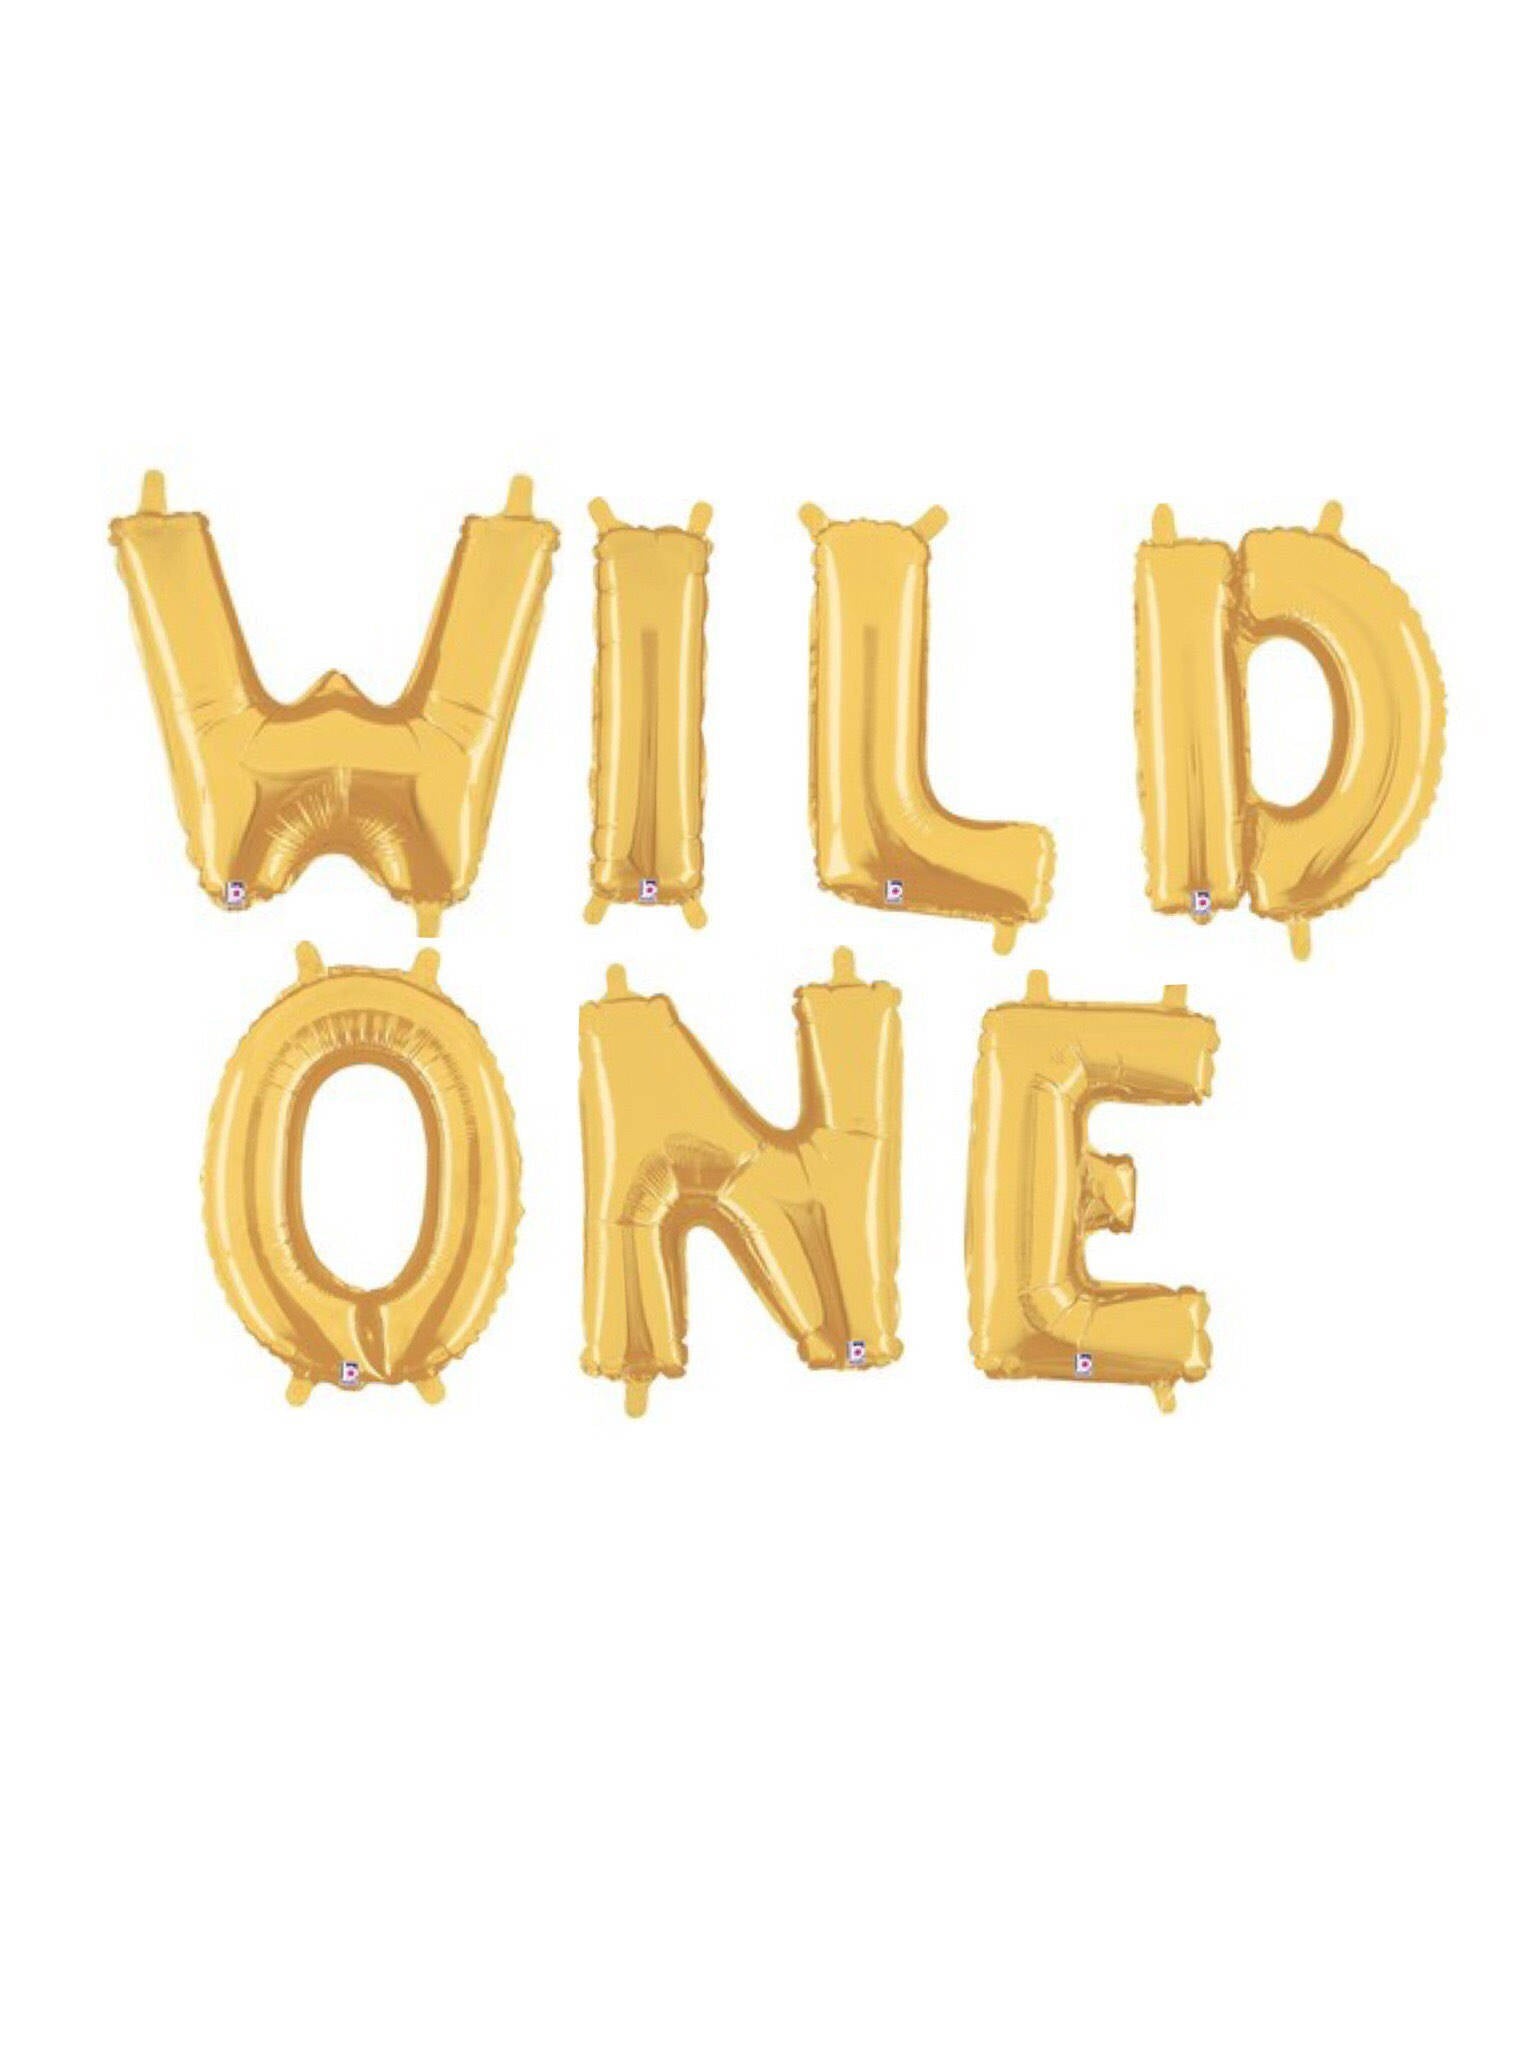 Wild One Balloon - glitterpaperscissors